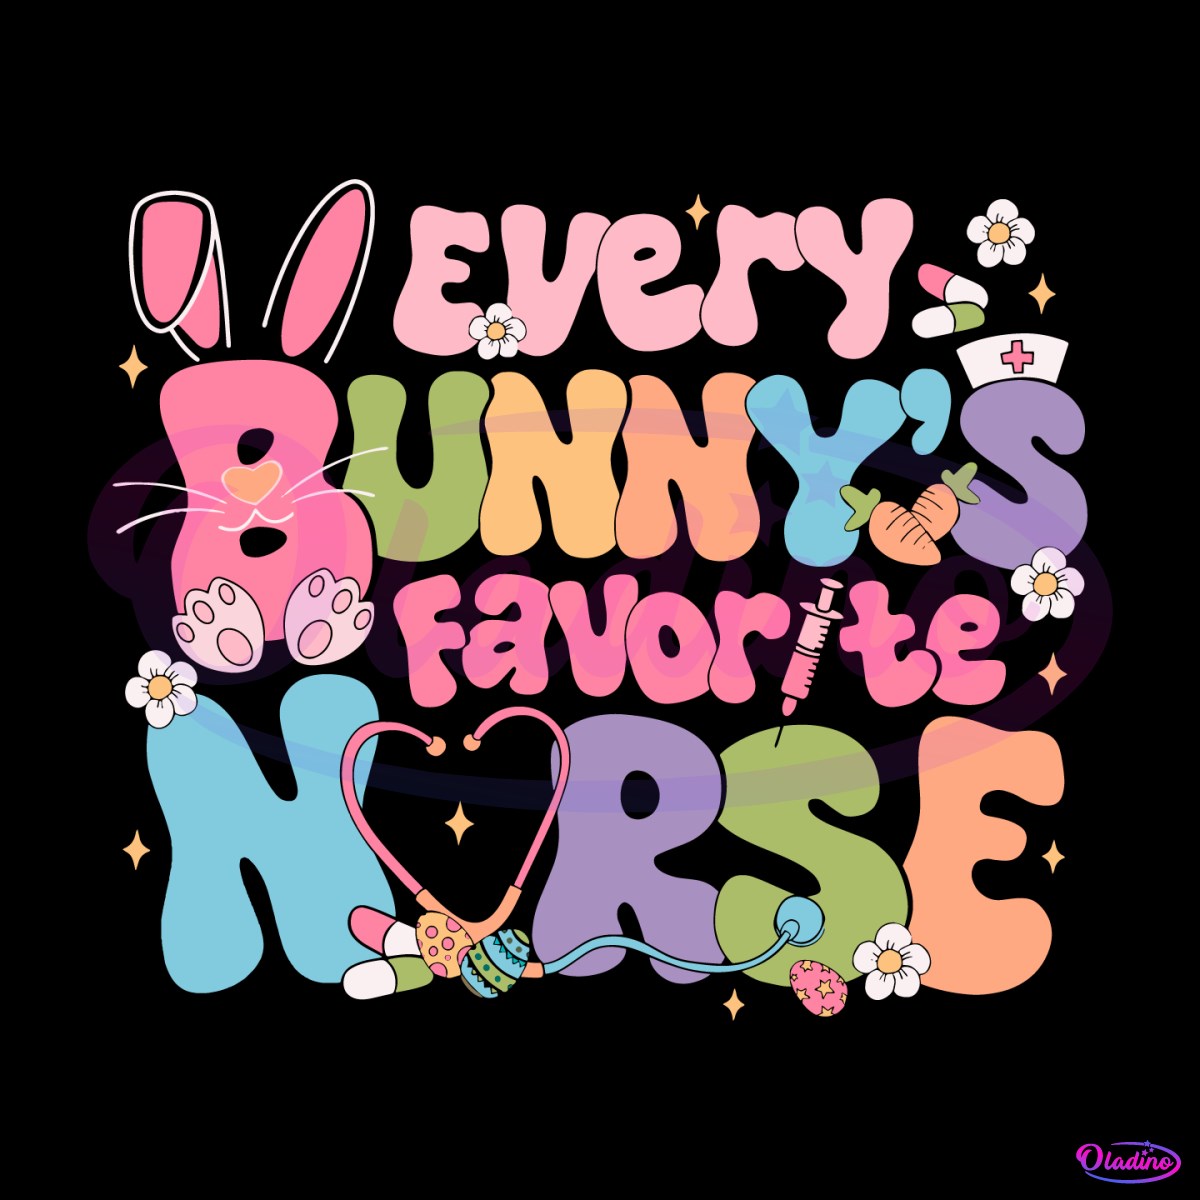 every-bunnys-favorite-nurse-happy-easter-svg